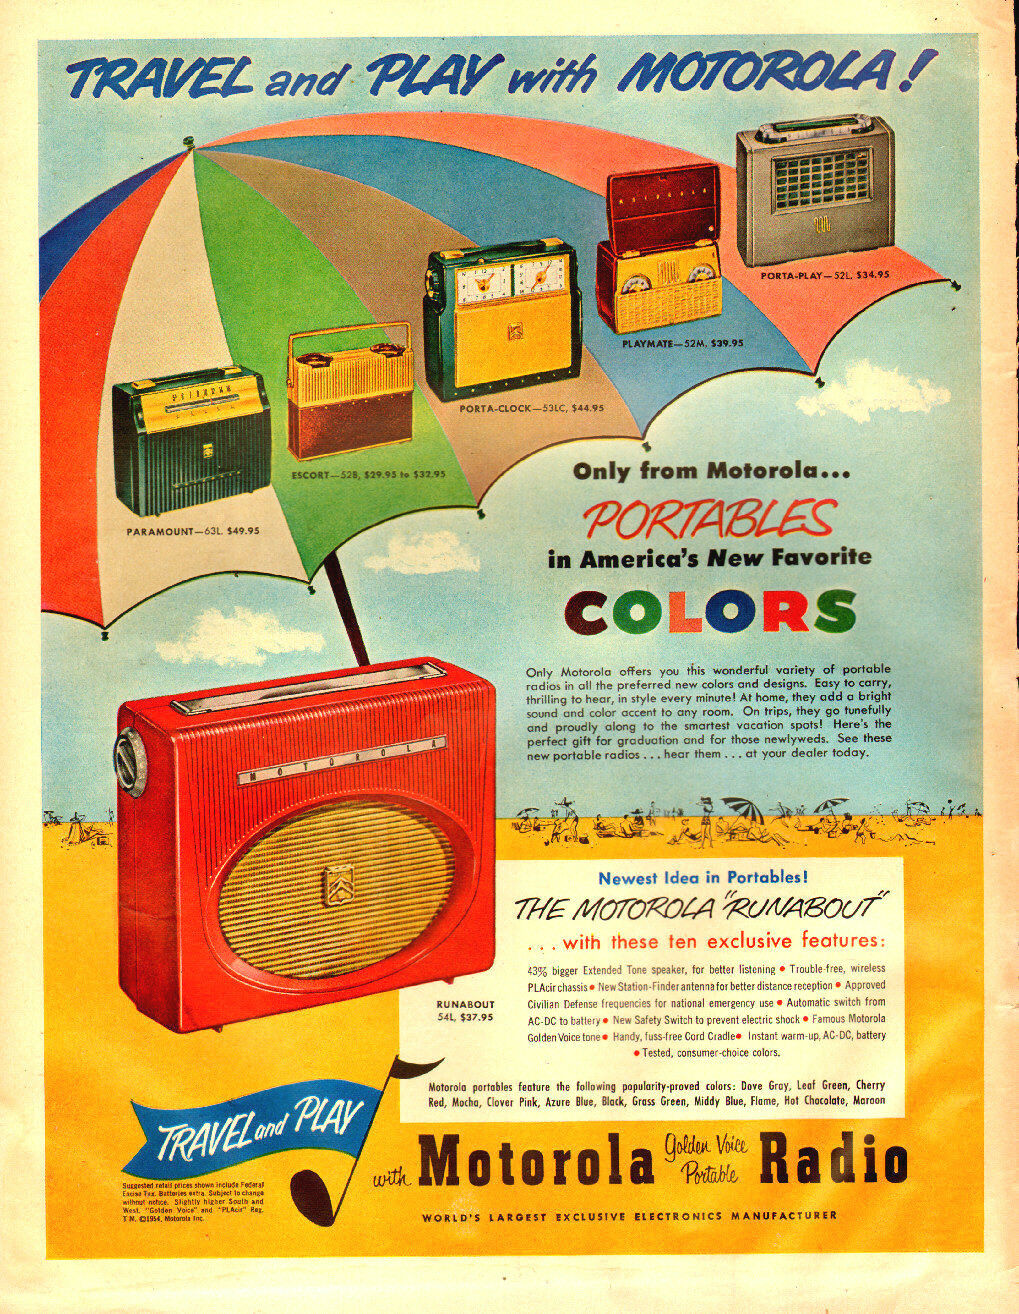 Motorola Radio & Television vintage ads - publicités années 50 Motorola Motoro30